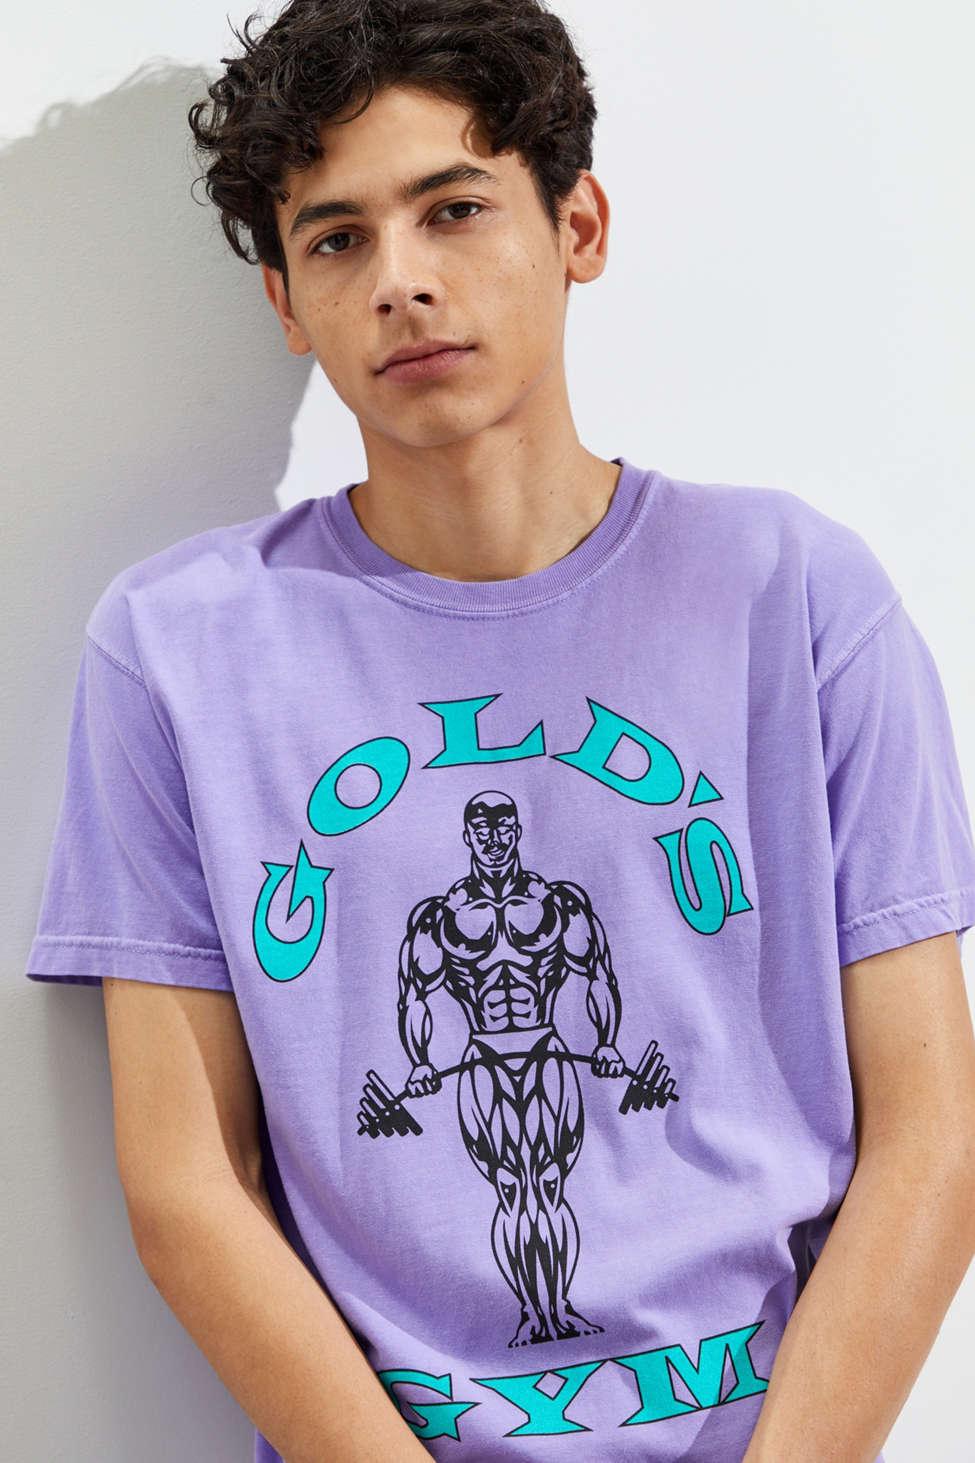 Gold's Gym T-Shirt - Official Licensed - BT-1